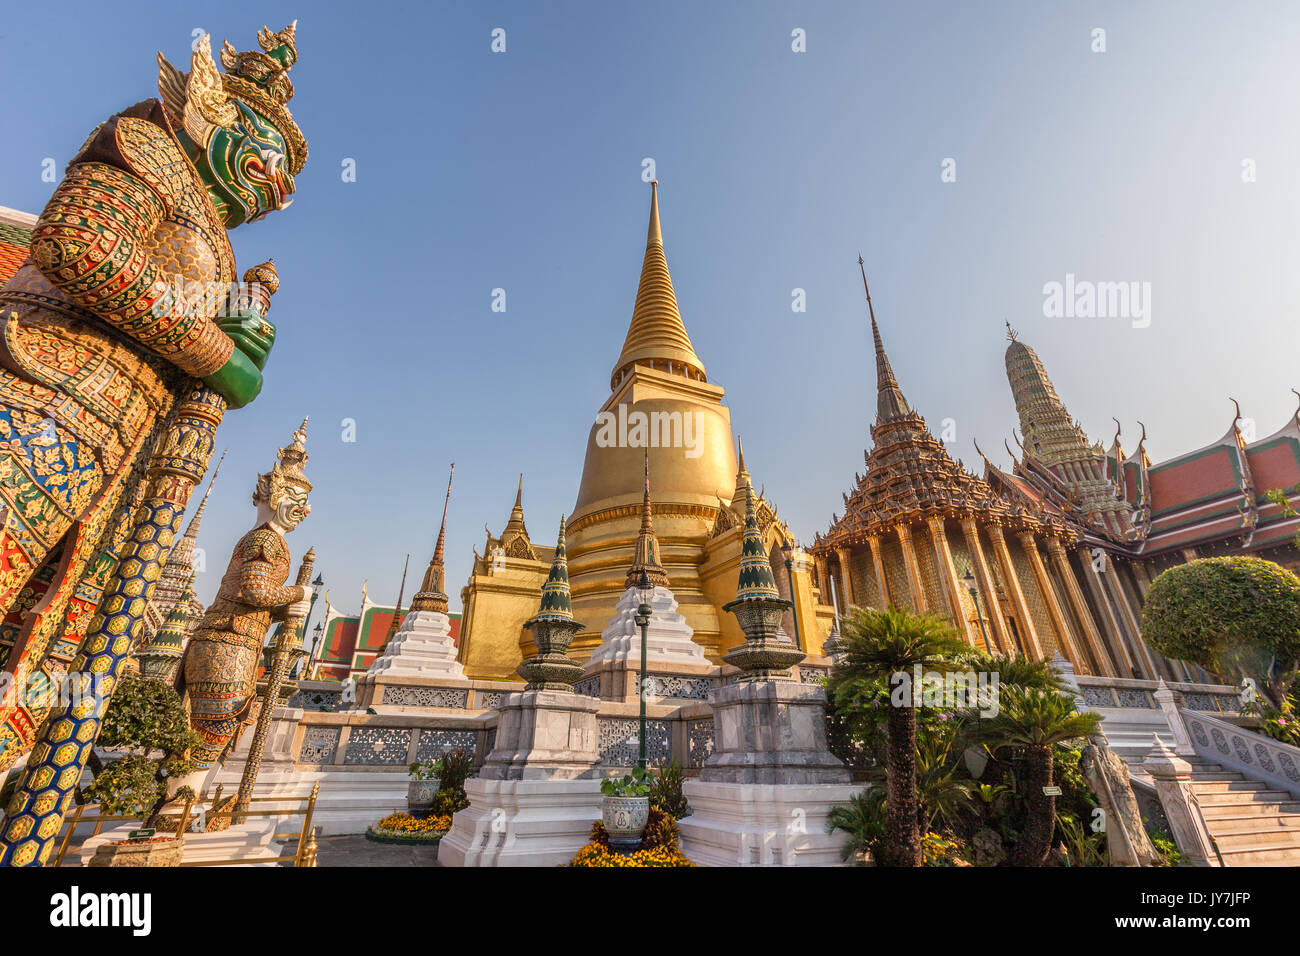 Wat Phra Kaew Temple of the Emerald Buddha inside the Grand Palace, Bangkok, Thailand Stock Photo